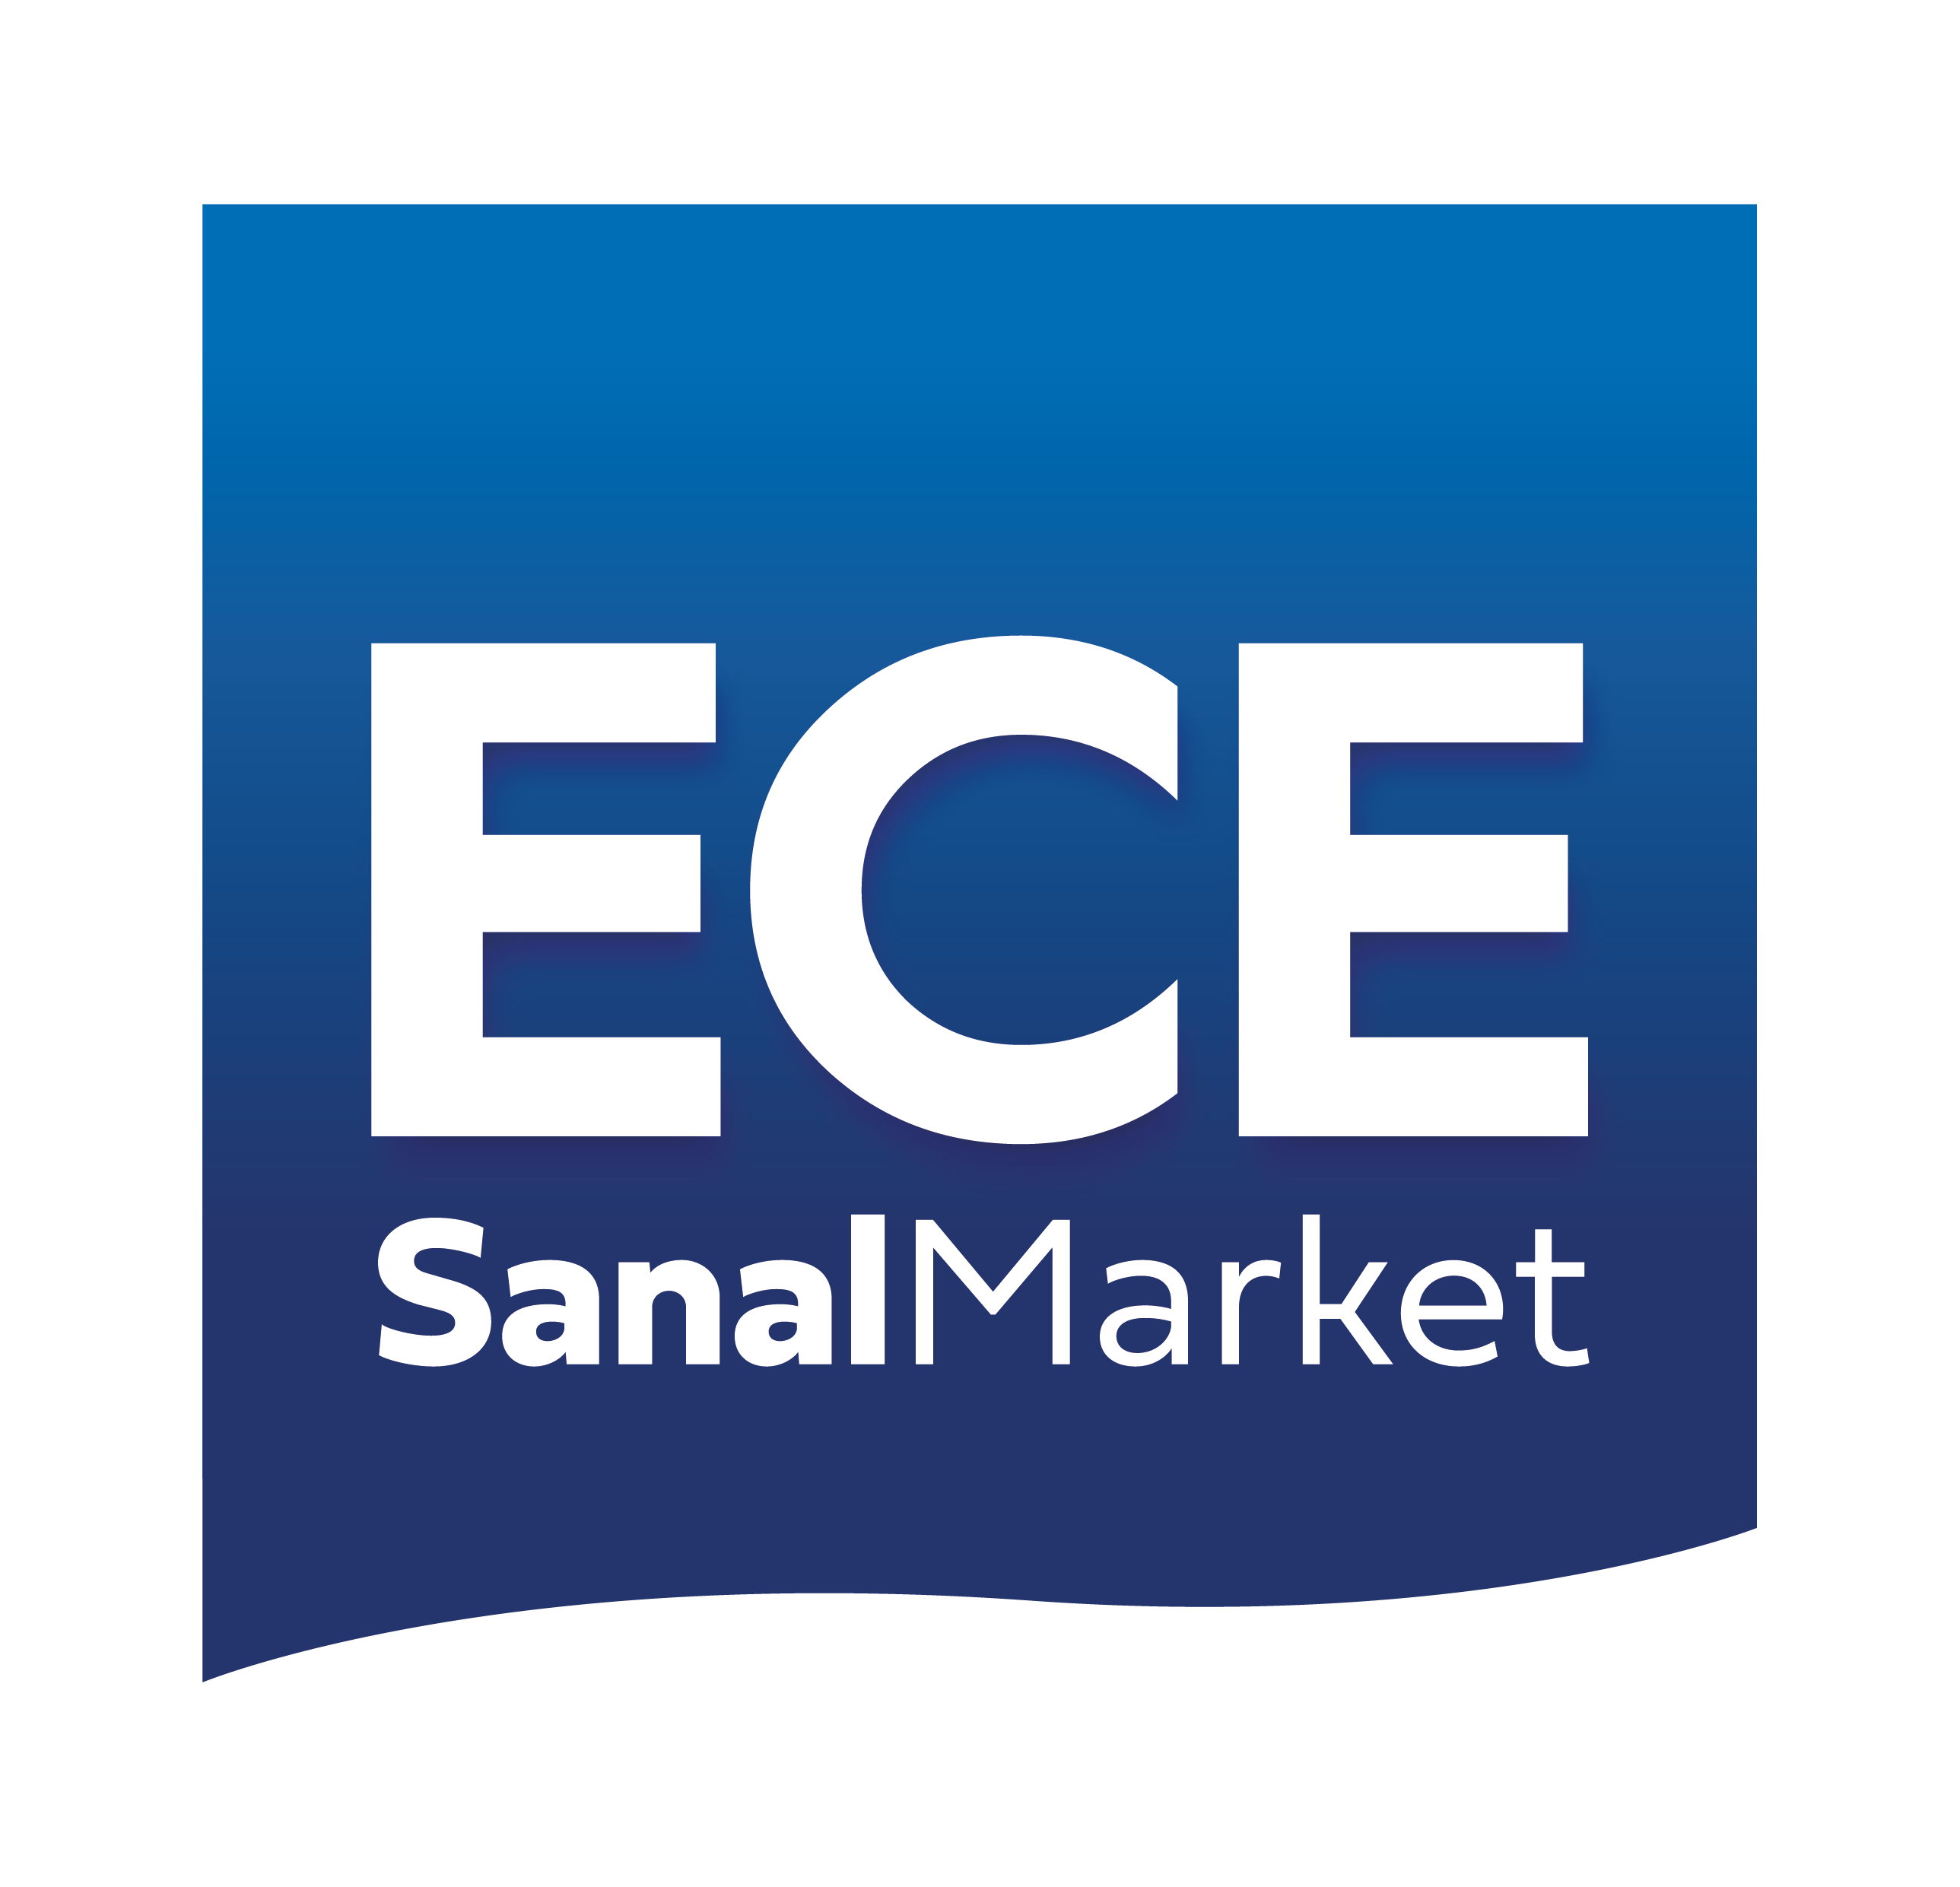 Ece Sanal Market